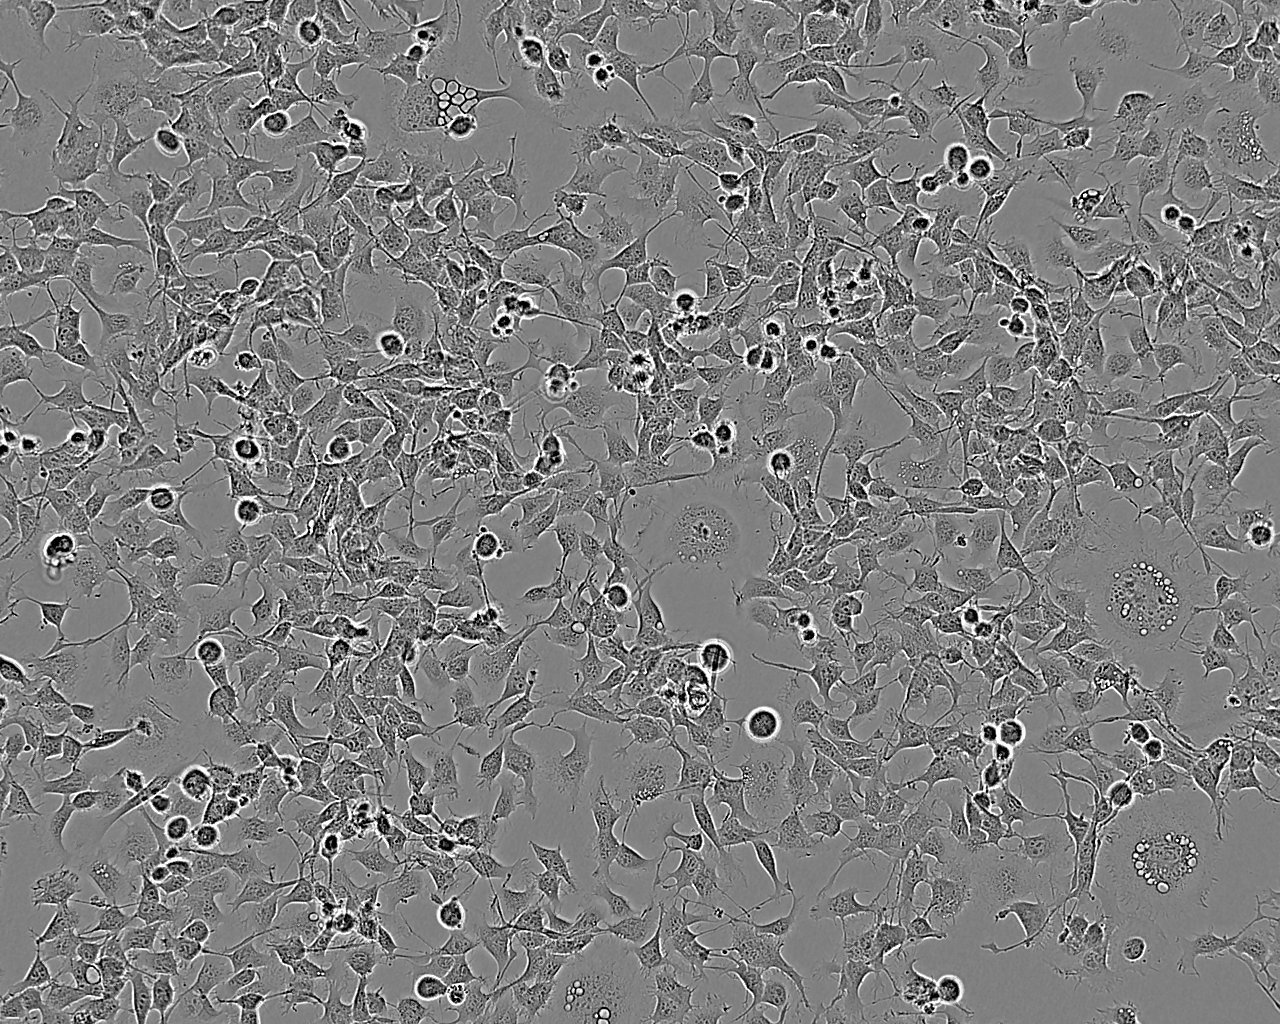 HeLa 229 Cell:人宫颈癌细胞系